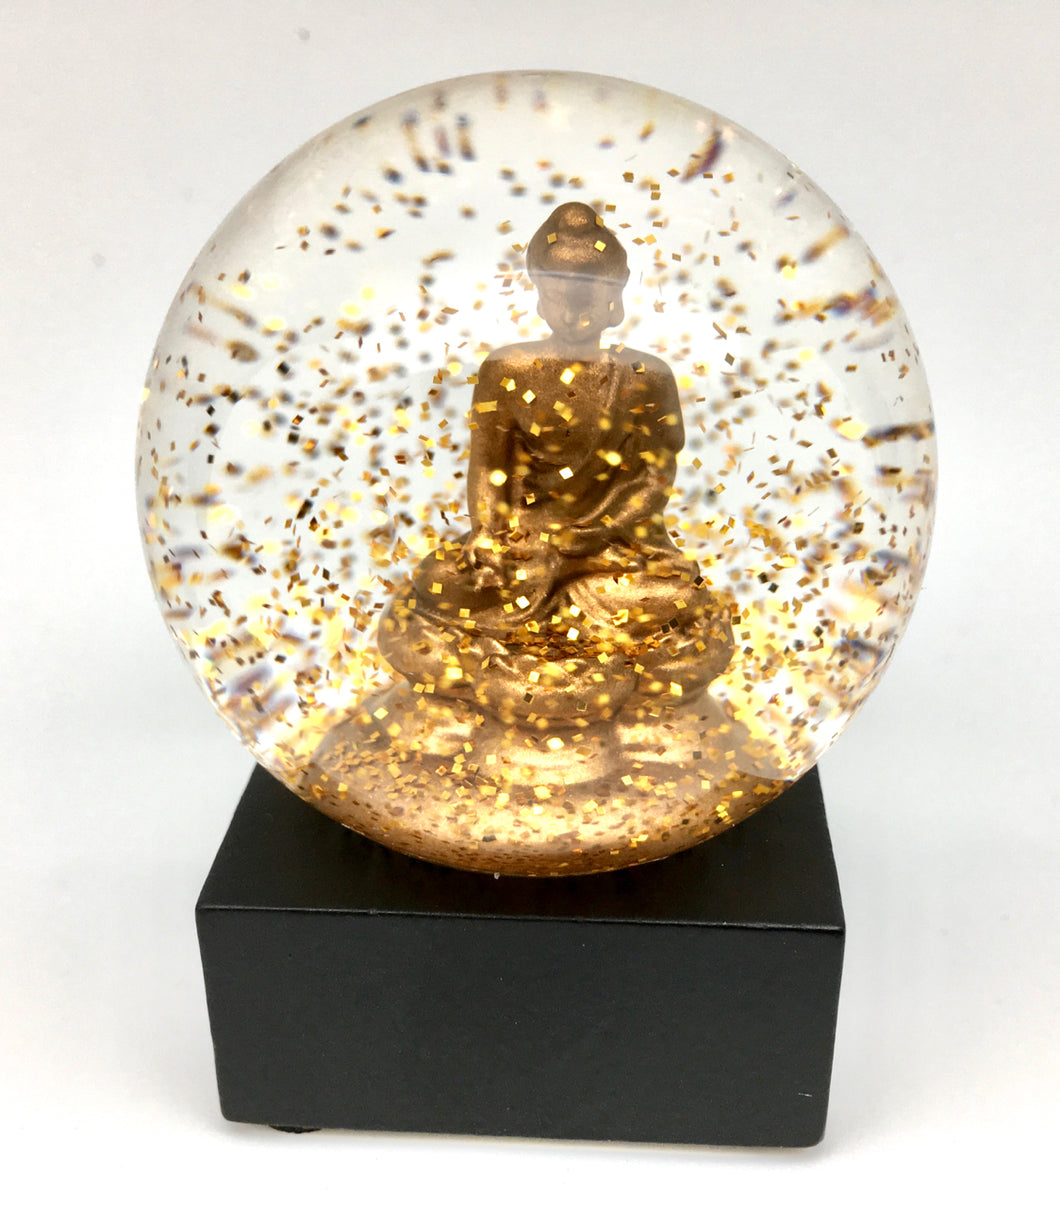 Cool Snow Globes Mini Gold Buddha Snow Globe